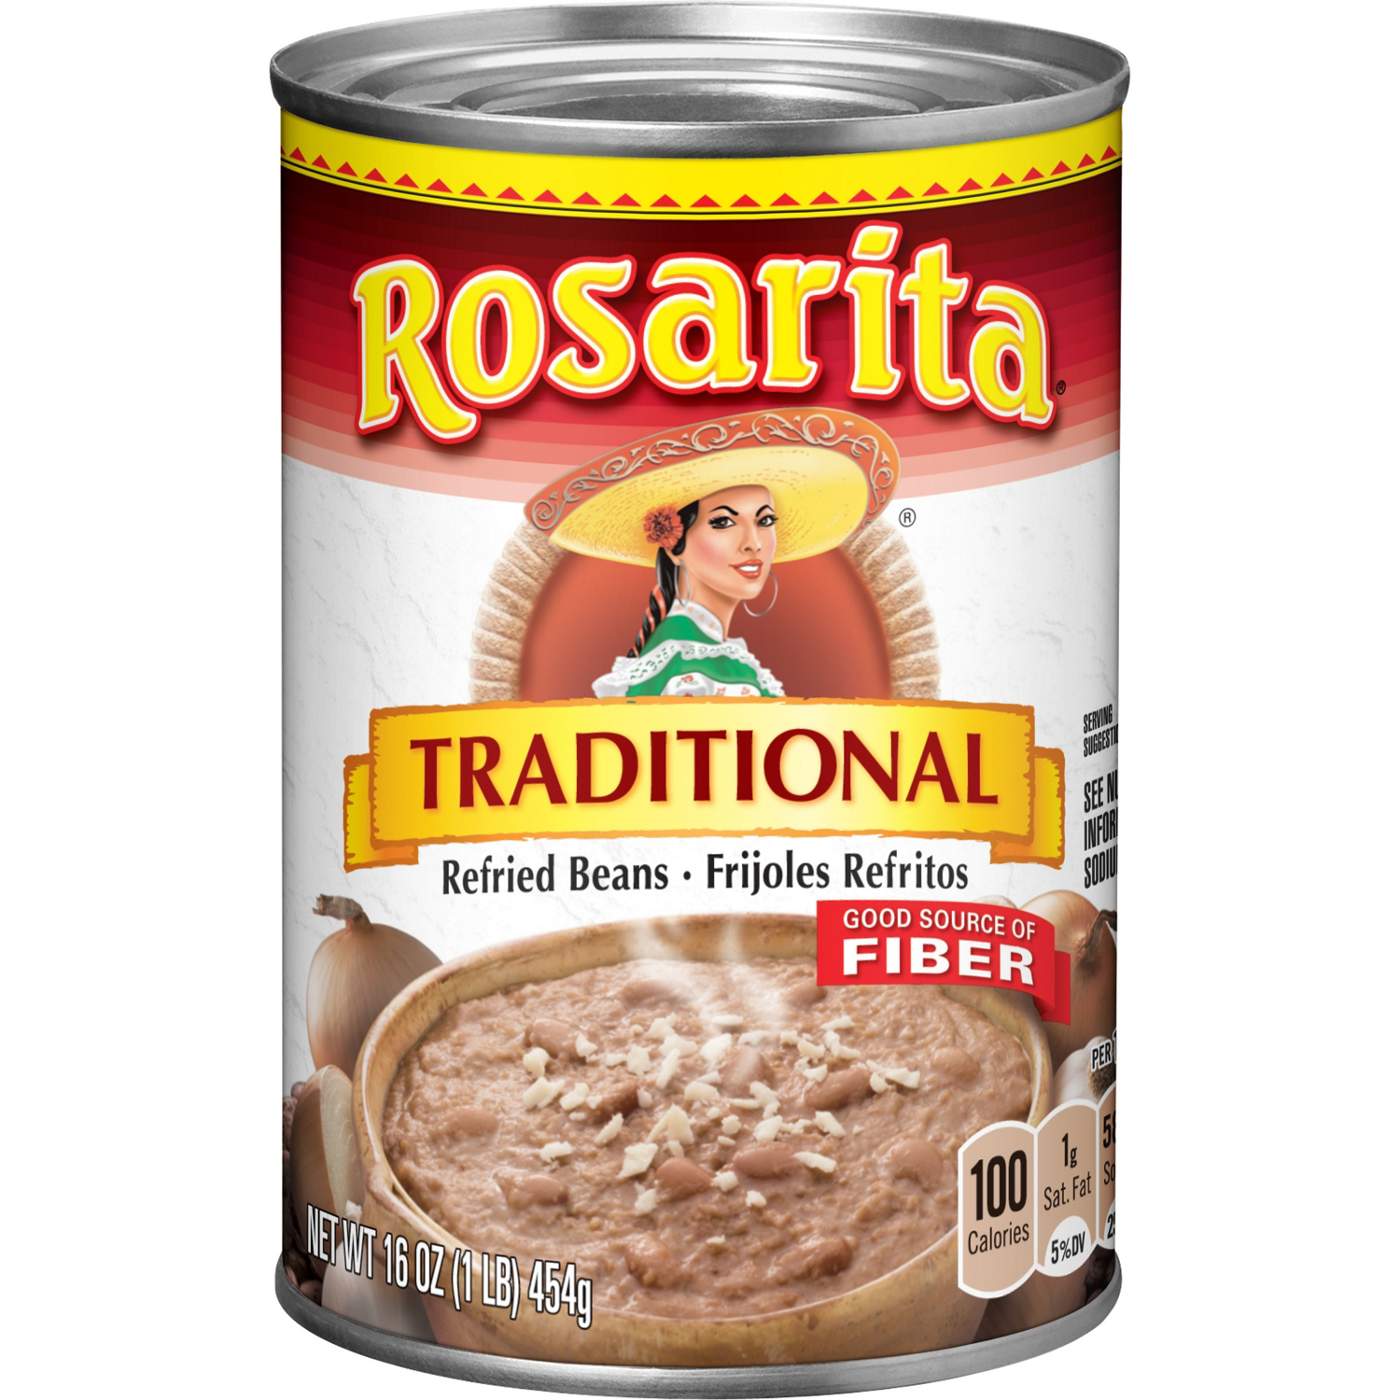 Rosarita Traditional Refried Beans; image 1 of 6